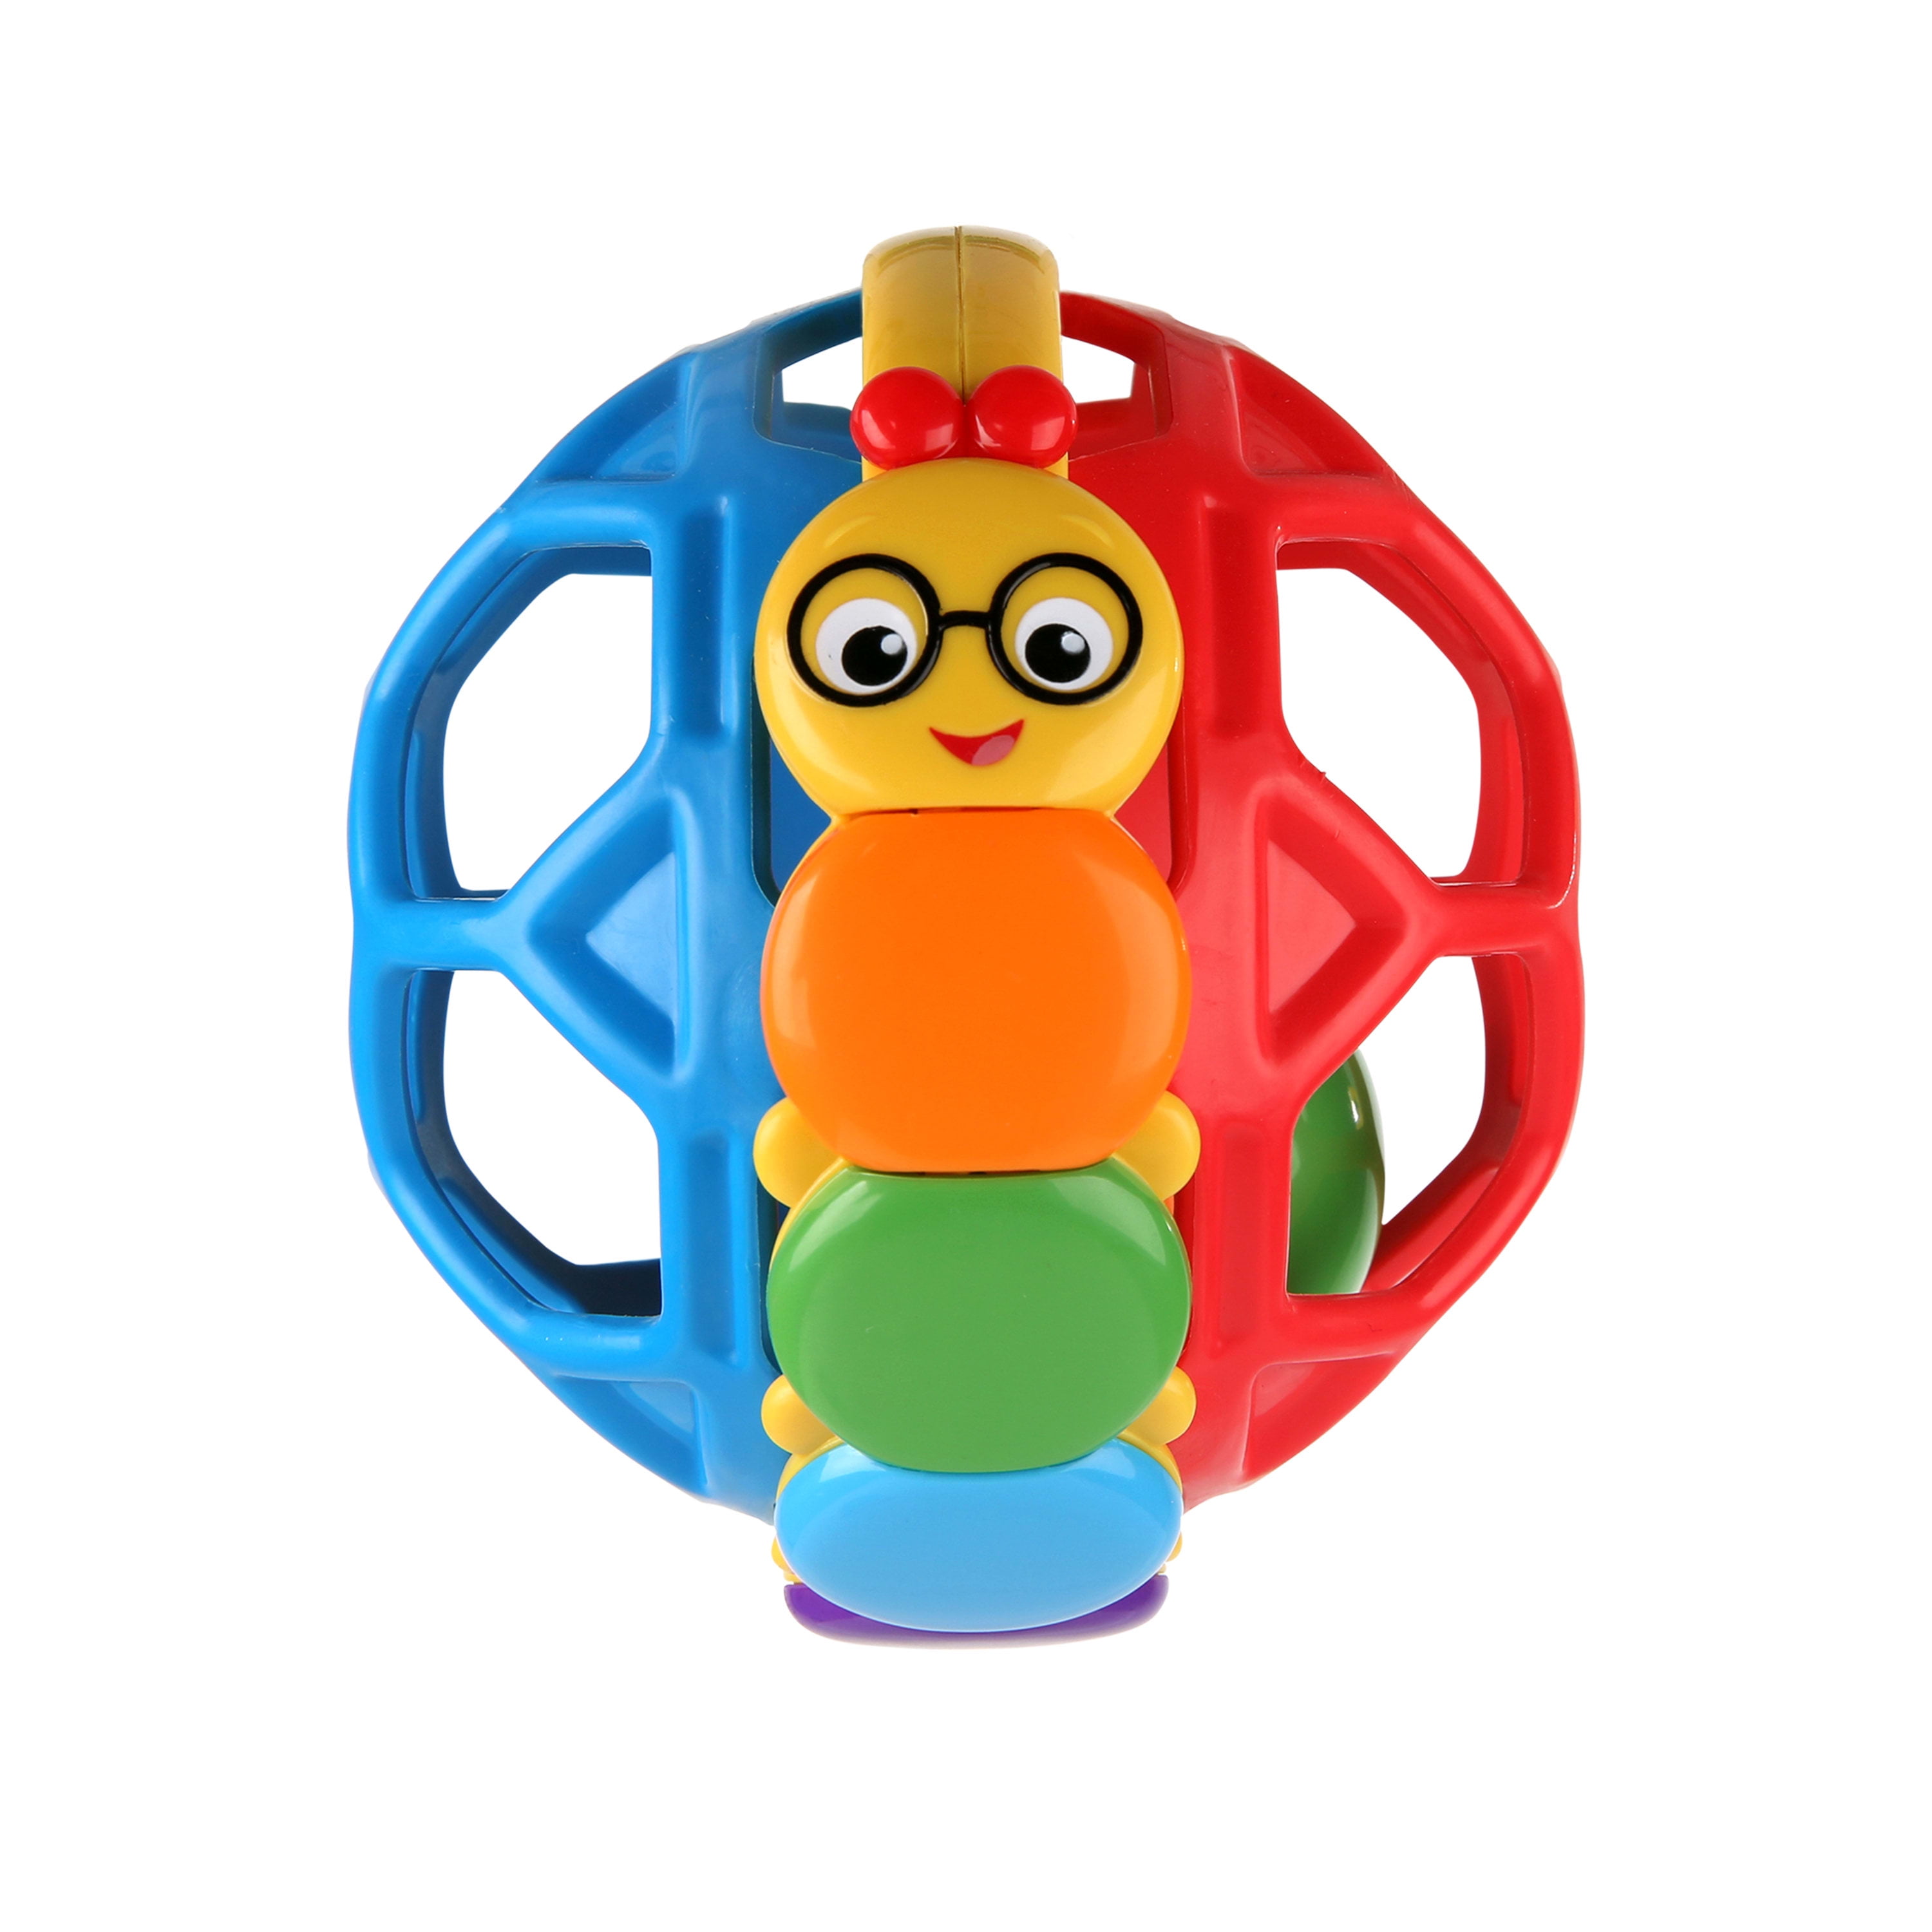 3 Infantino Sensory Farm Friend Activity Toy balls 